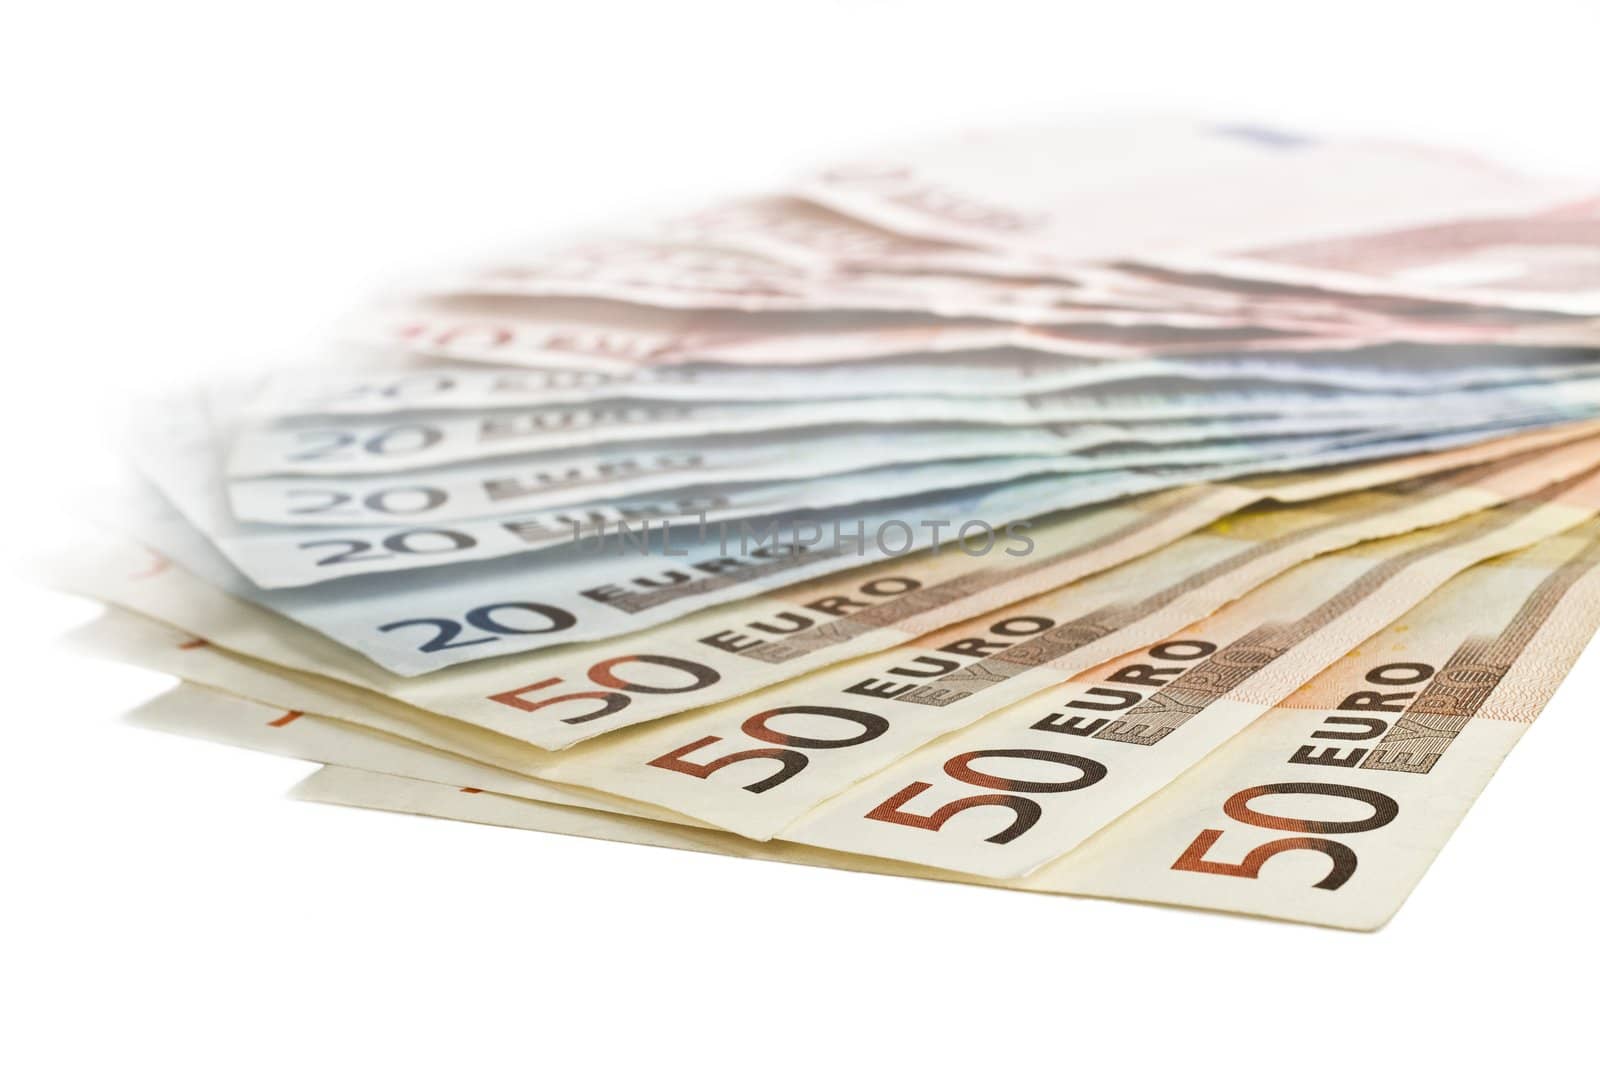 euro bills in close up shot